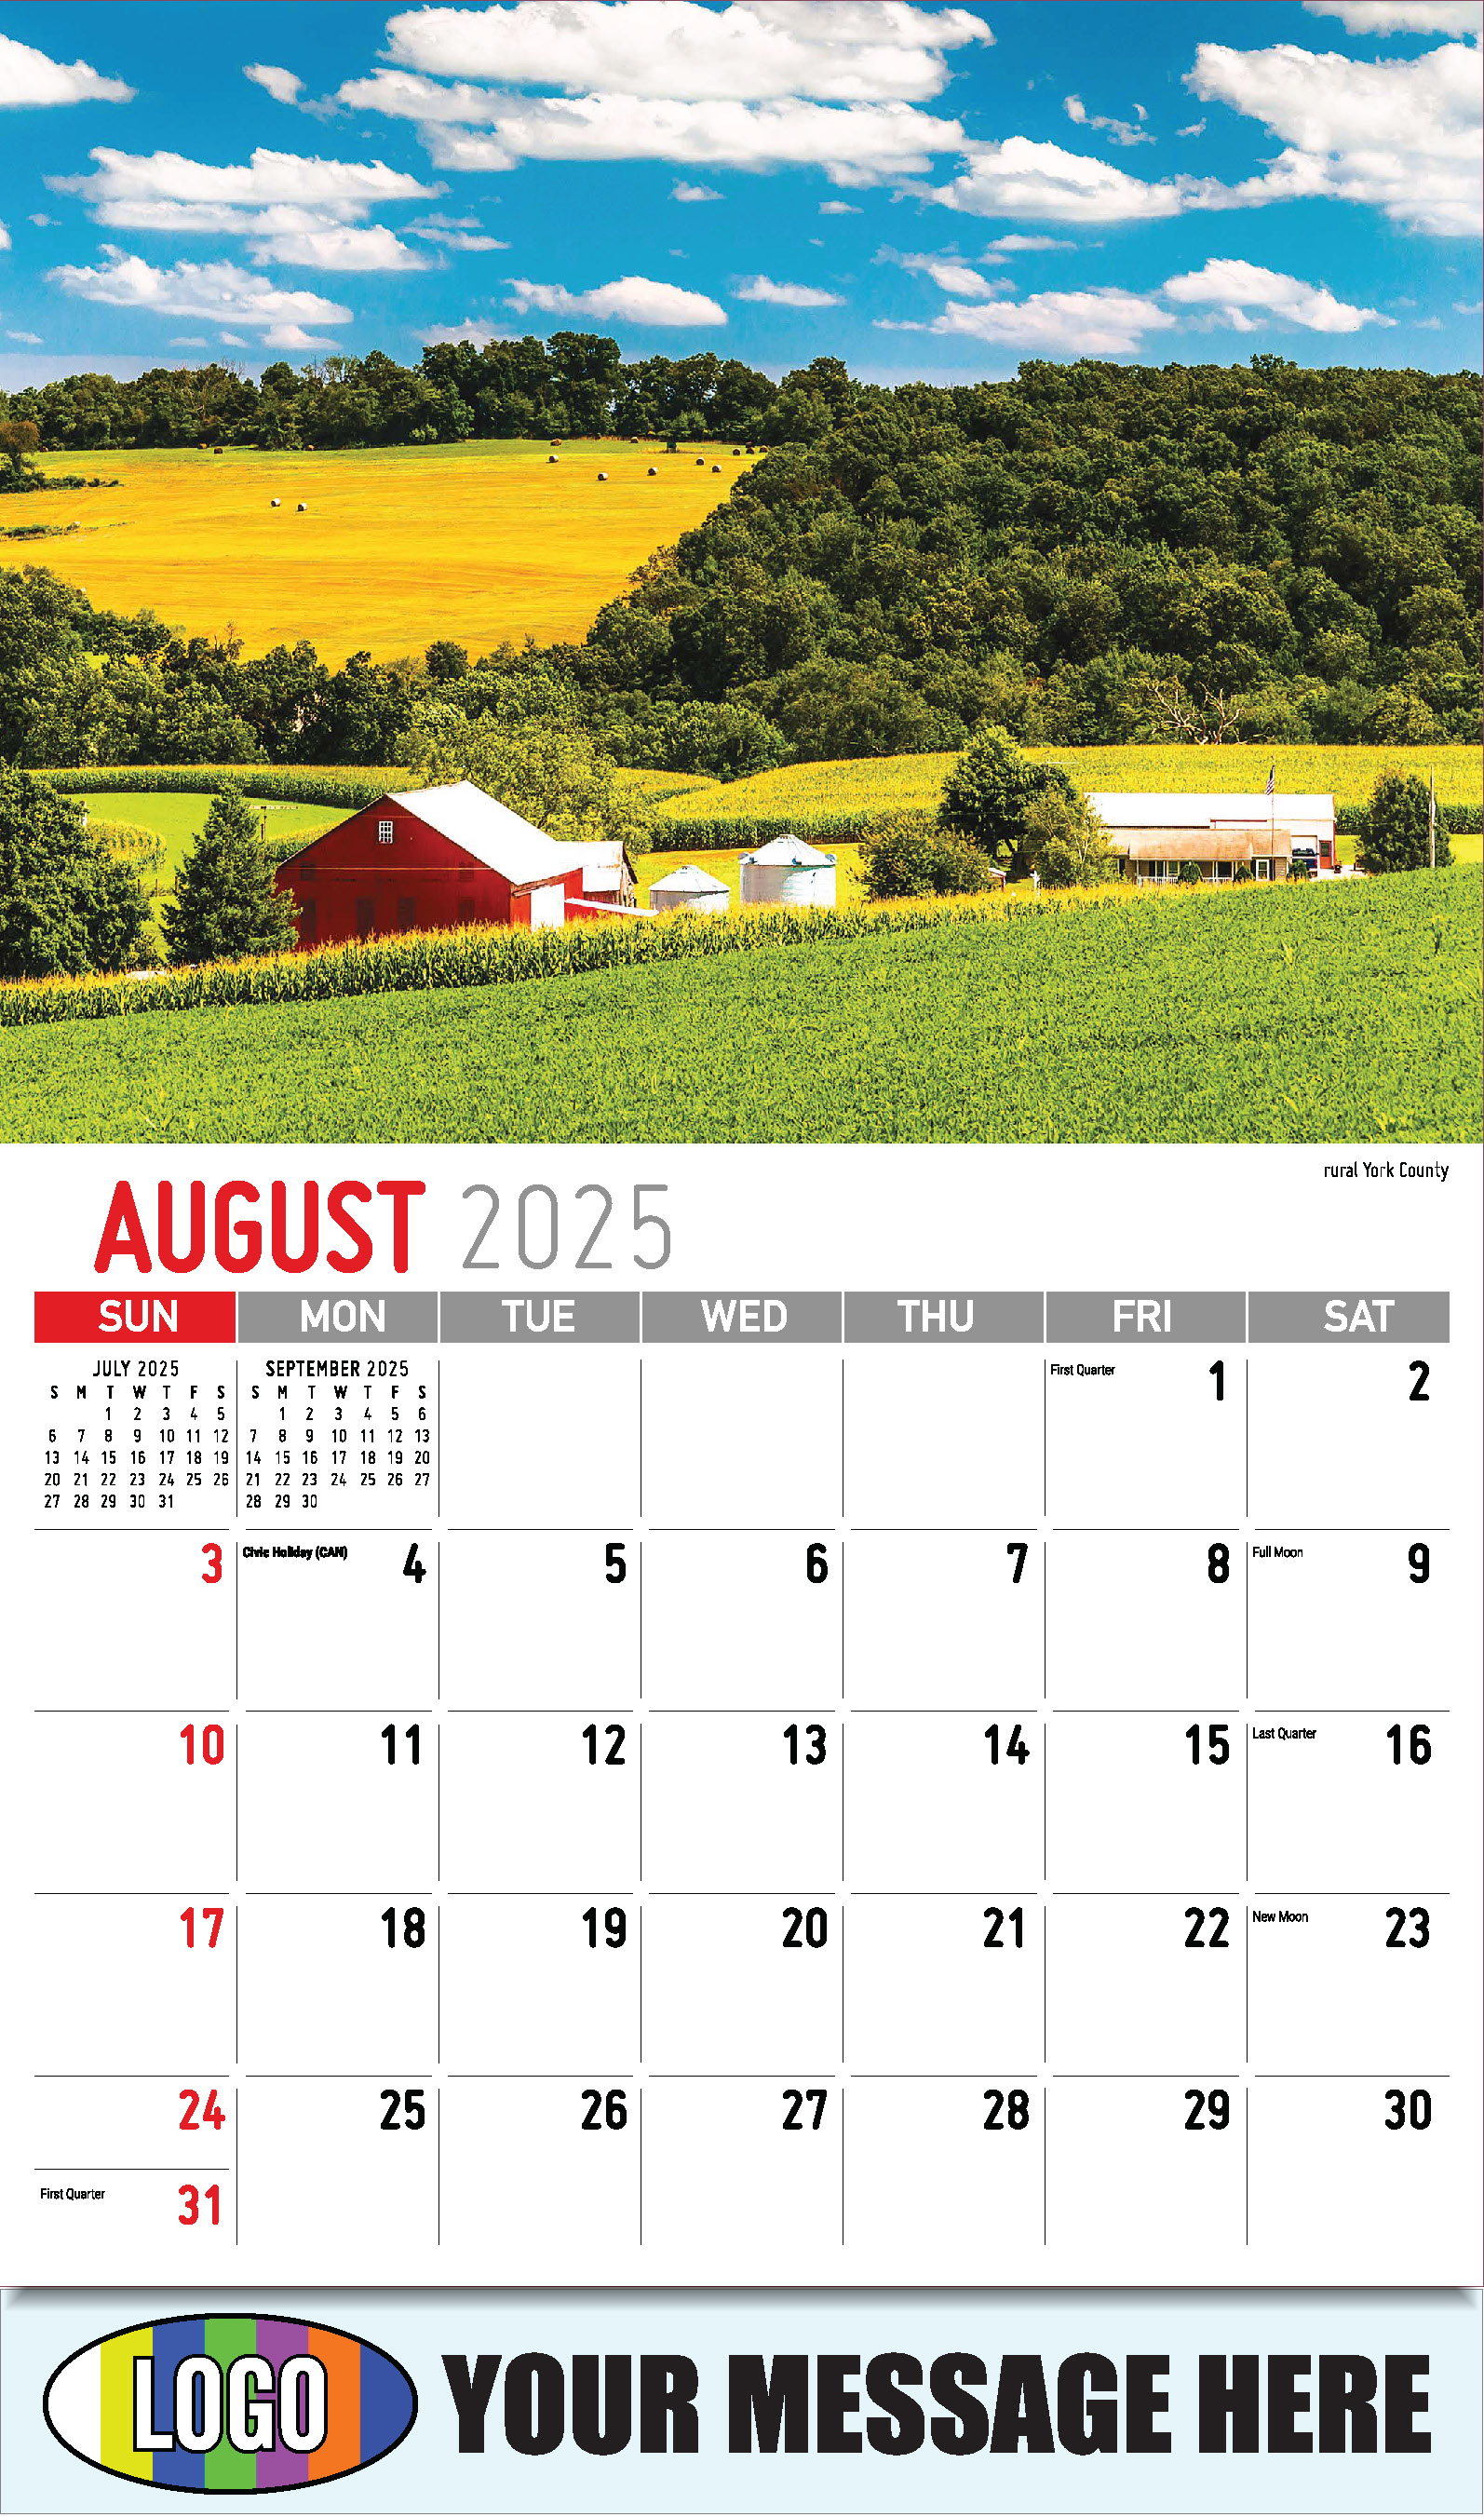 Scenes of Pennsylvania 2025 Business Promotion Calendar - August